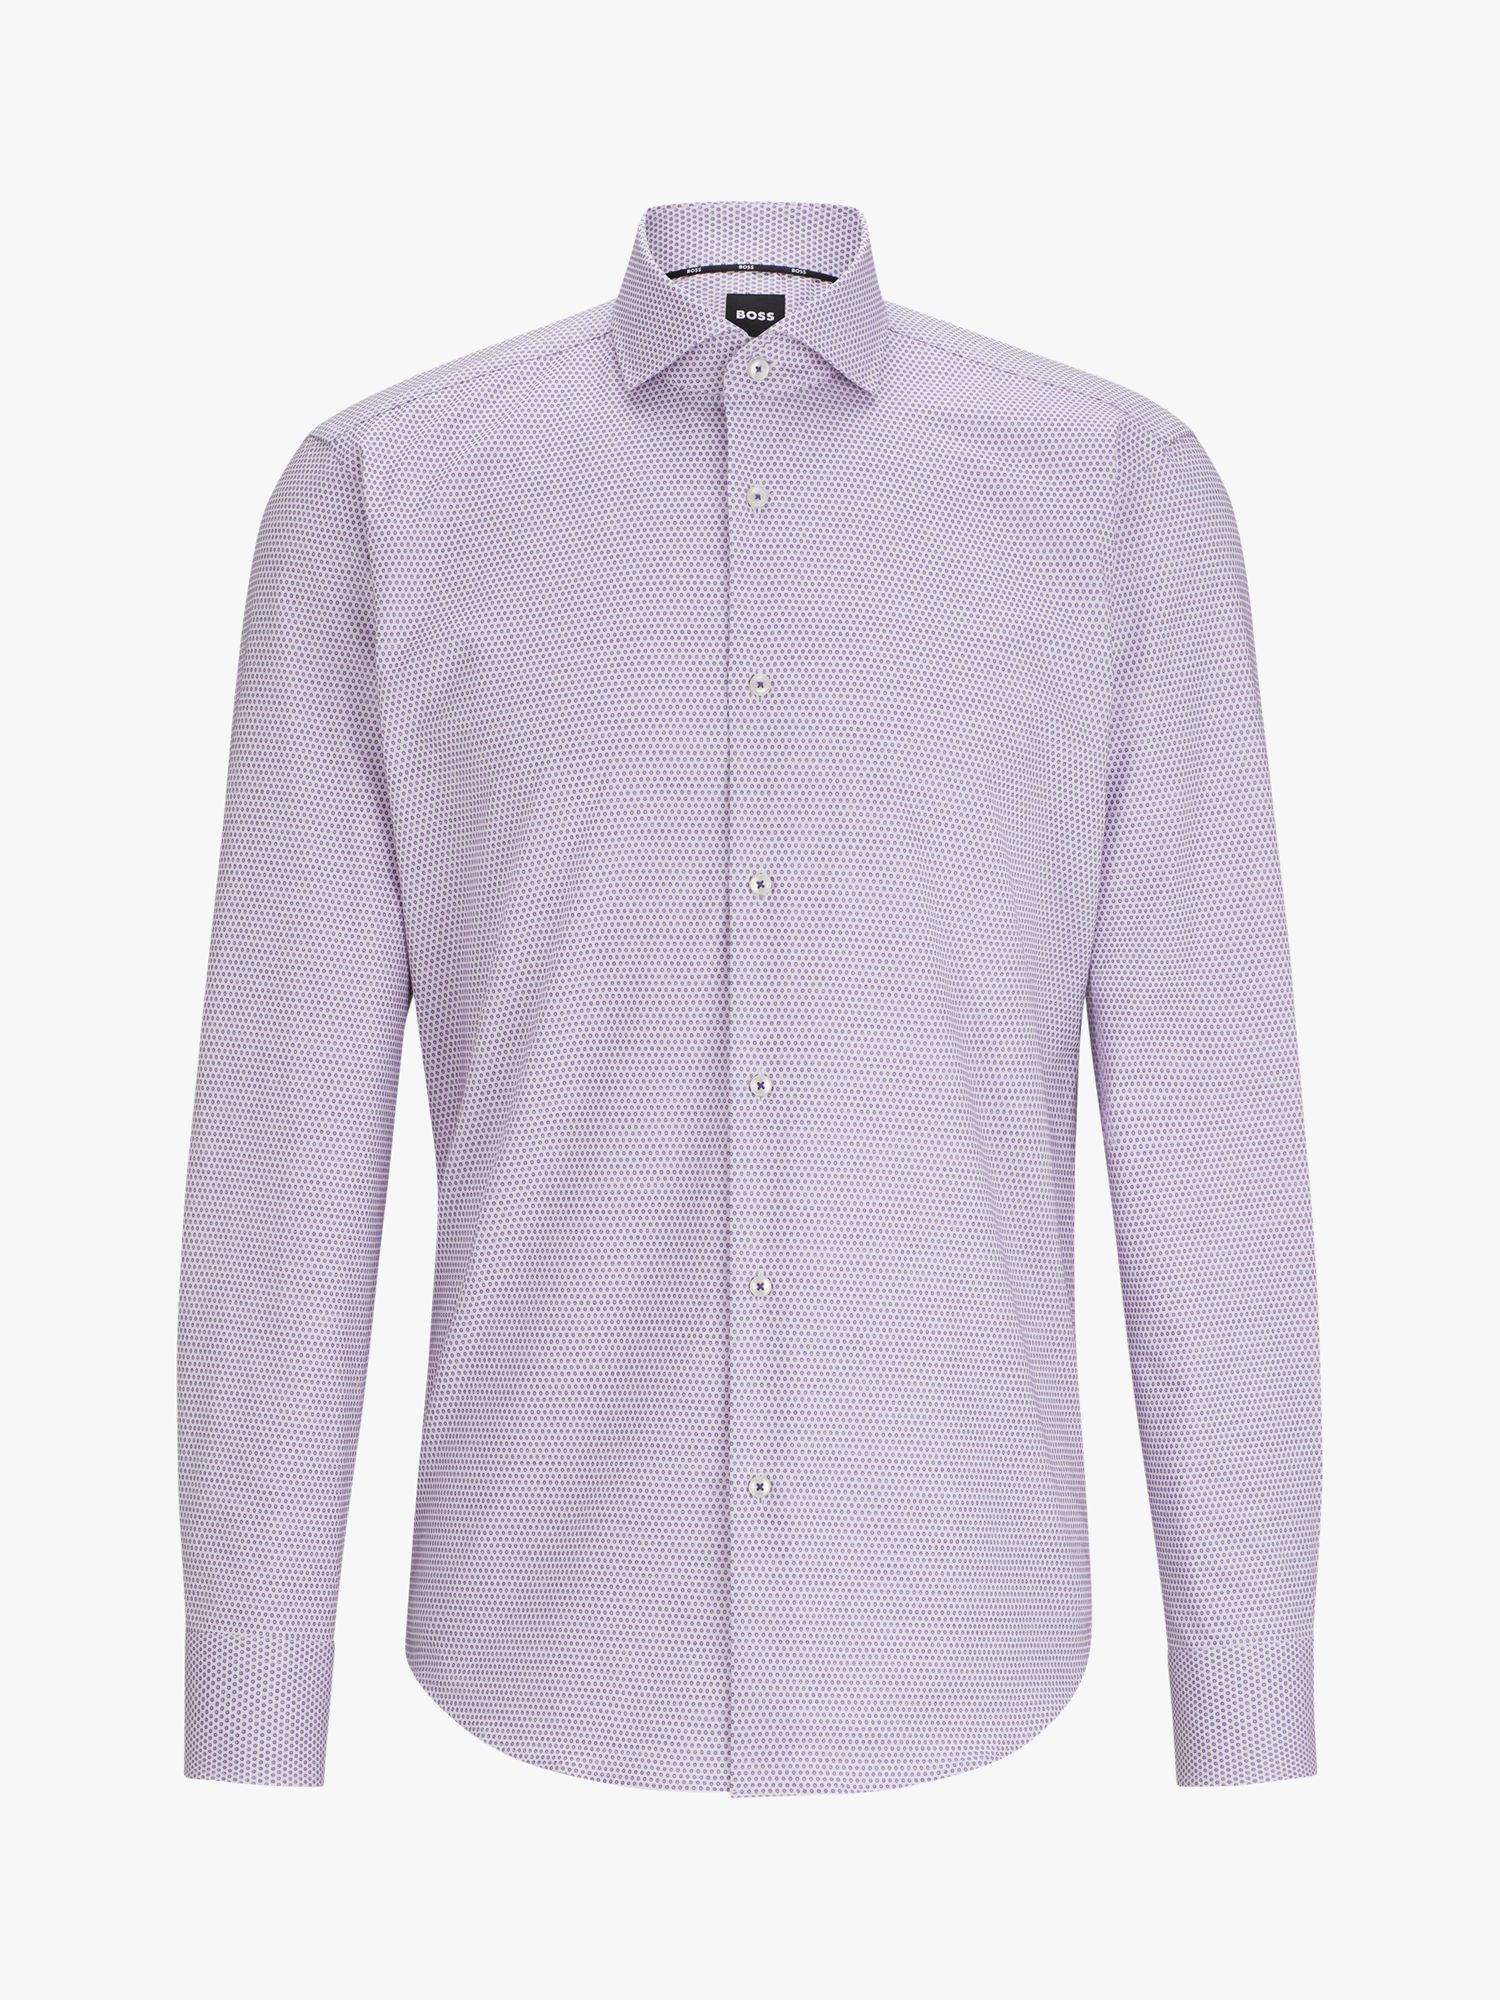 BOSS Joe Spread Regular Fit Spot Shirt, Bright Purple at John Lewis ...